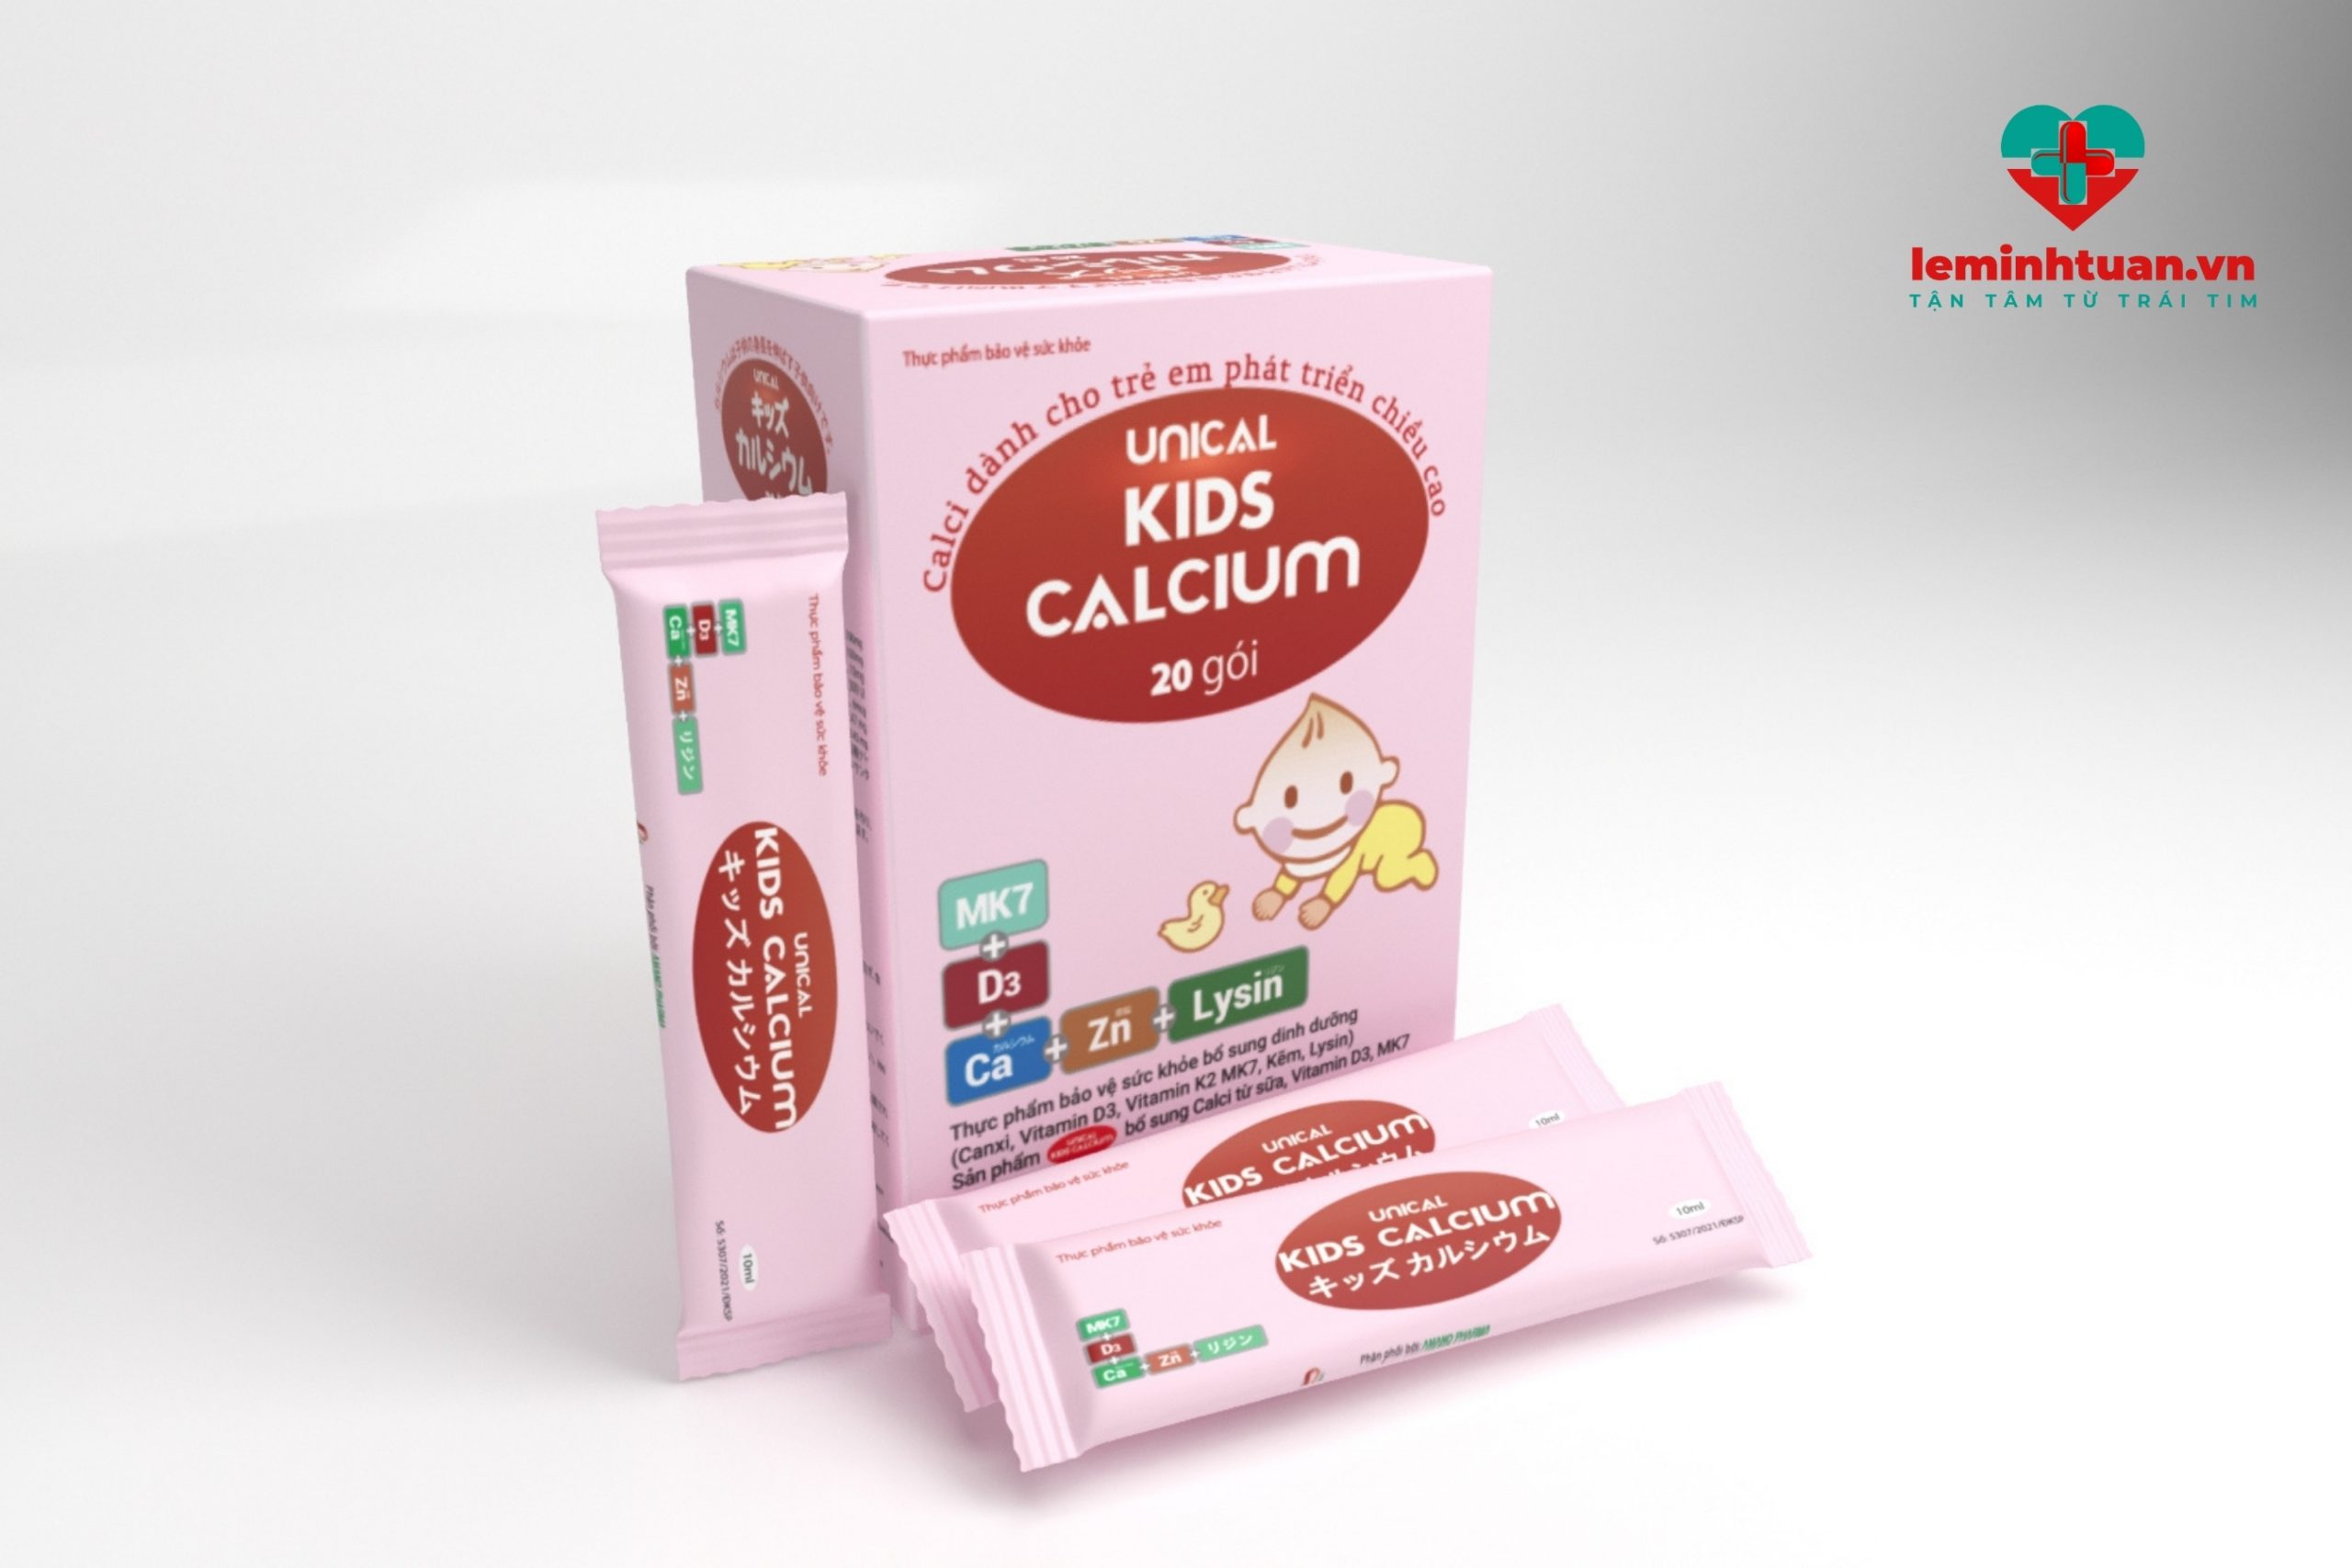 Unical Kids Calcium bổ sung canxi từ sữa cho trẻ dễ hấp thu